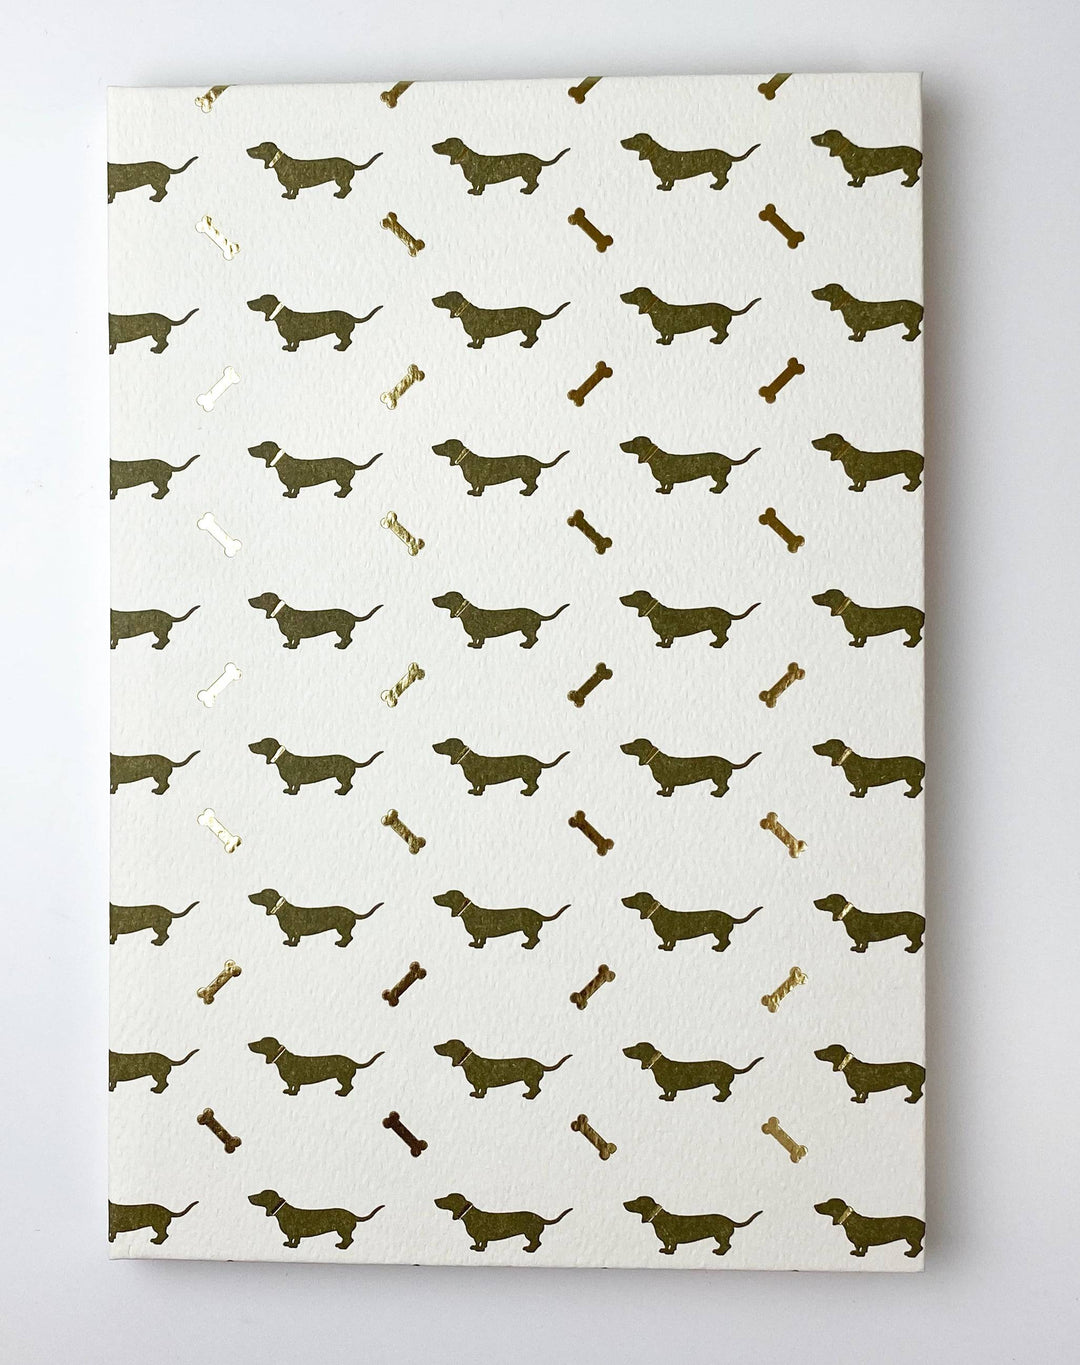 Foil Embossed Dogs Hardcover Notebook - Rossi 1931 Letterpress Paper Cover-LetterSeals.com